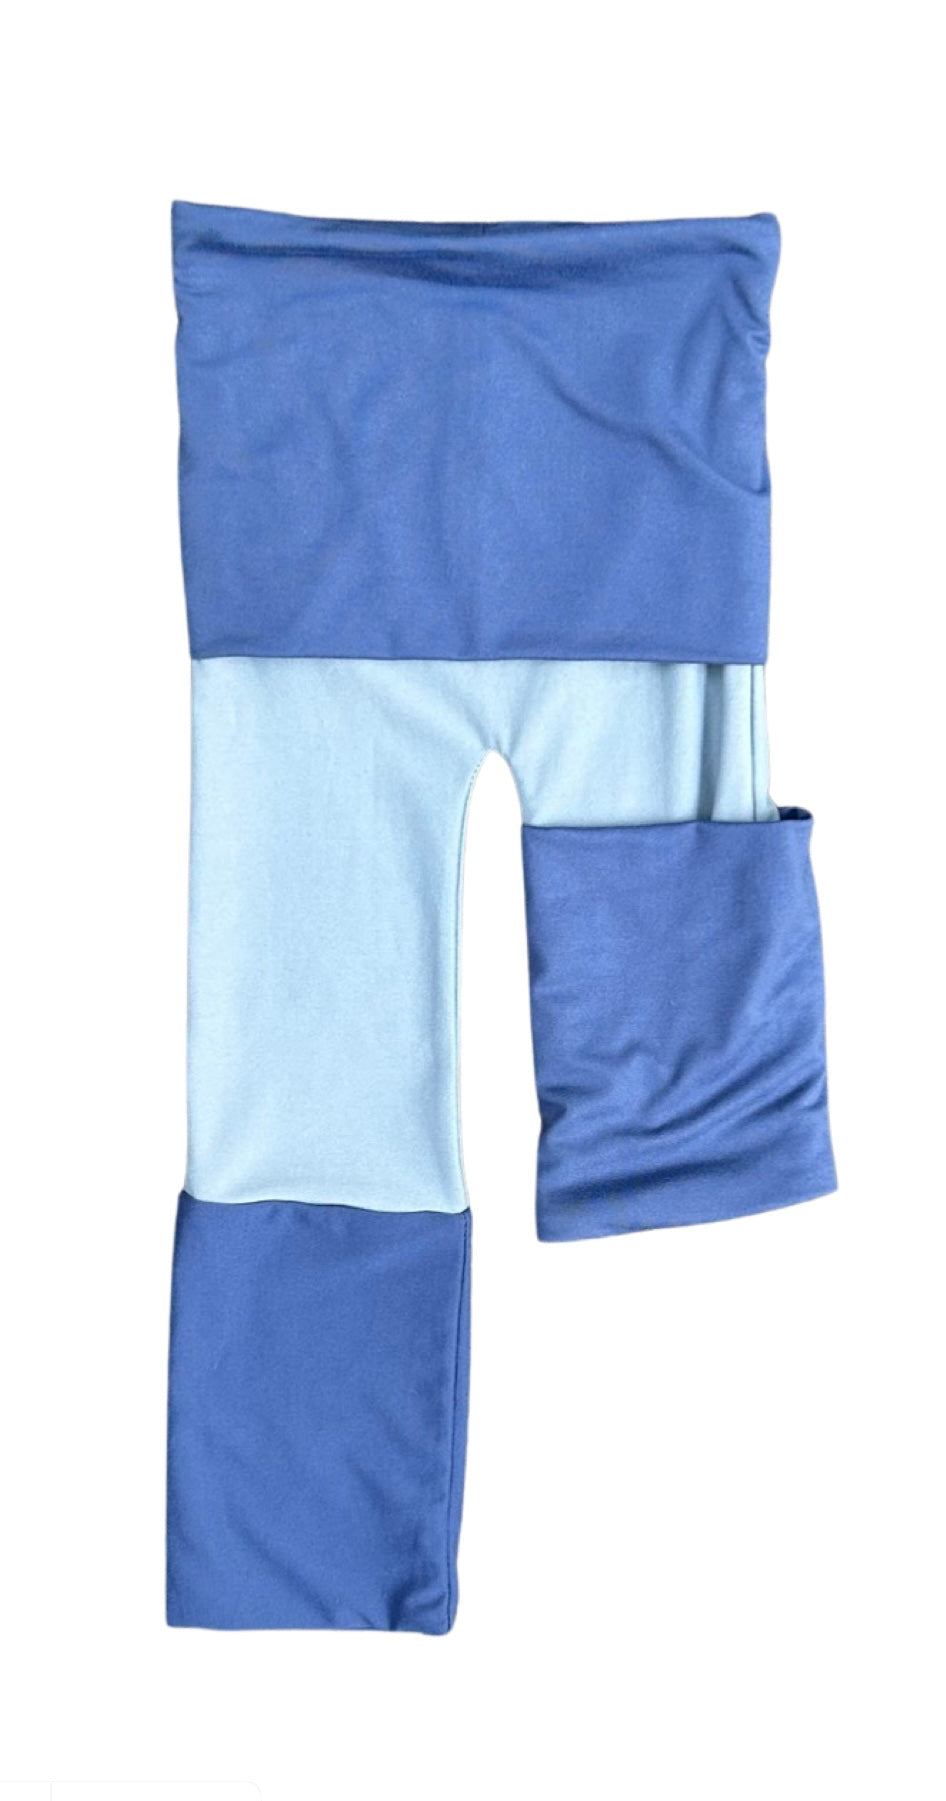 Adjustable Pants - Sky Blue with Light Blue